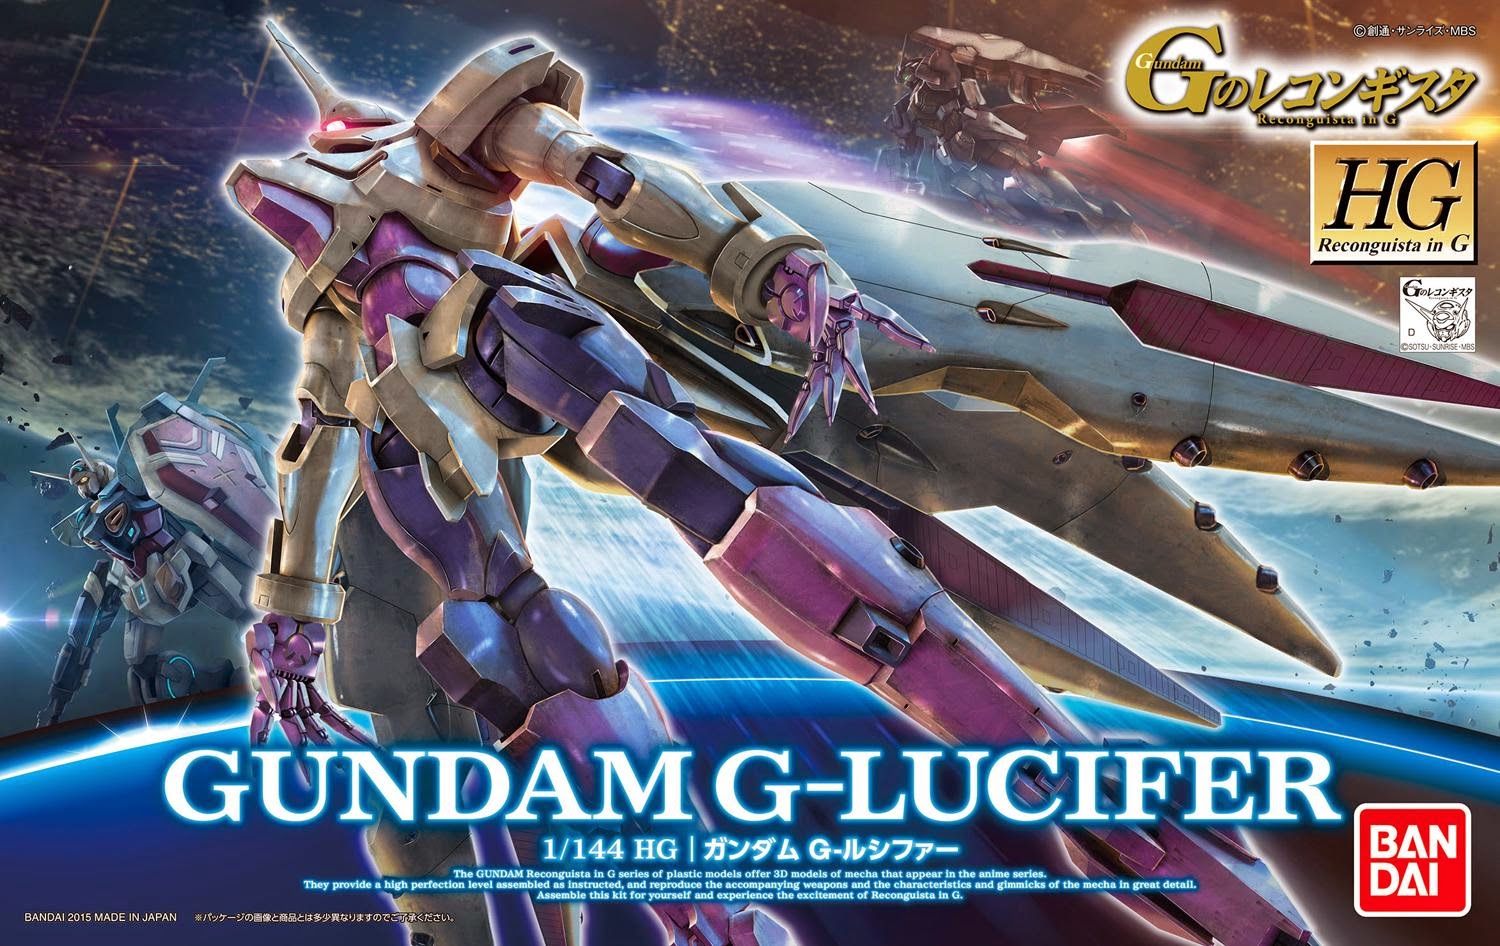 Gundam 1/144 HG Reconguista G #11 Gundam G-Lucifer Model Kit